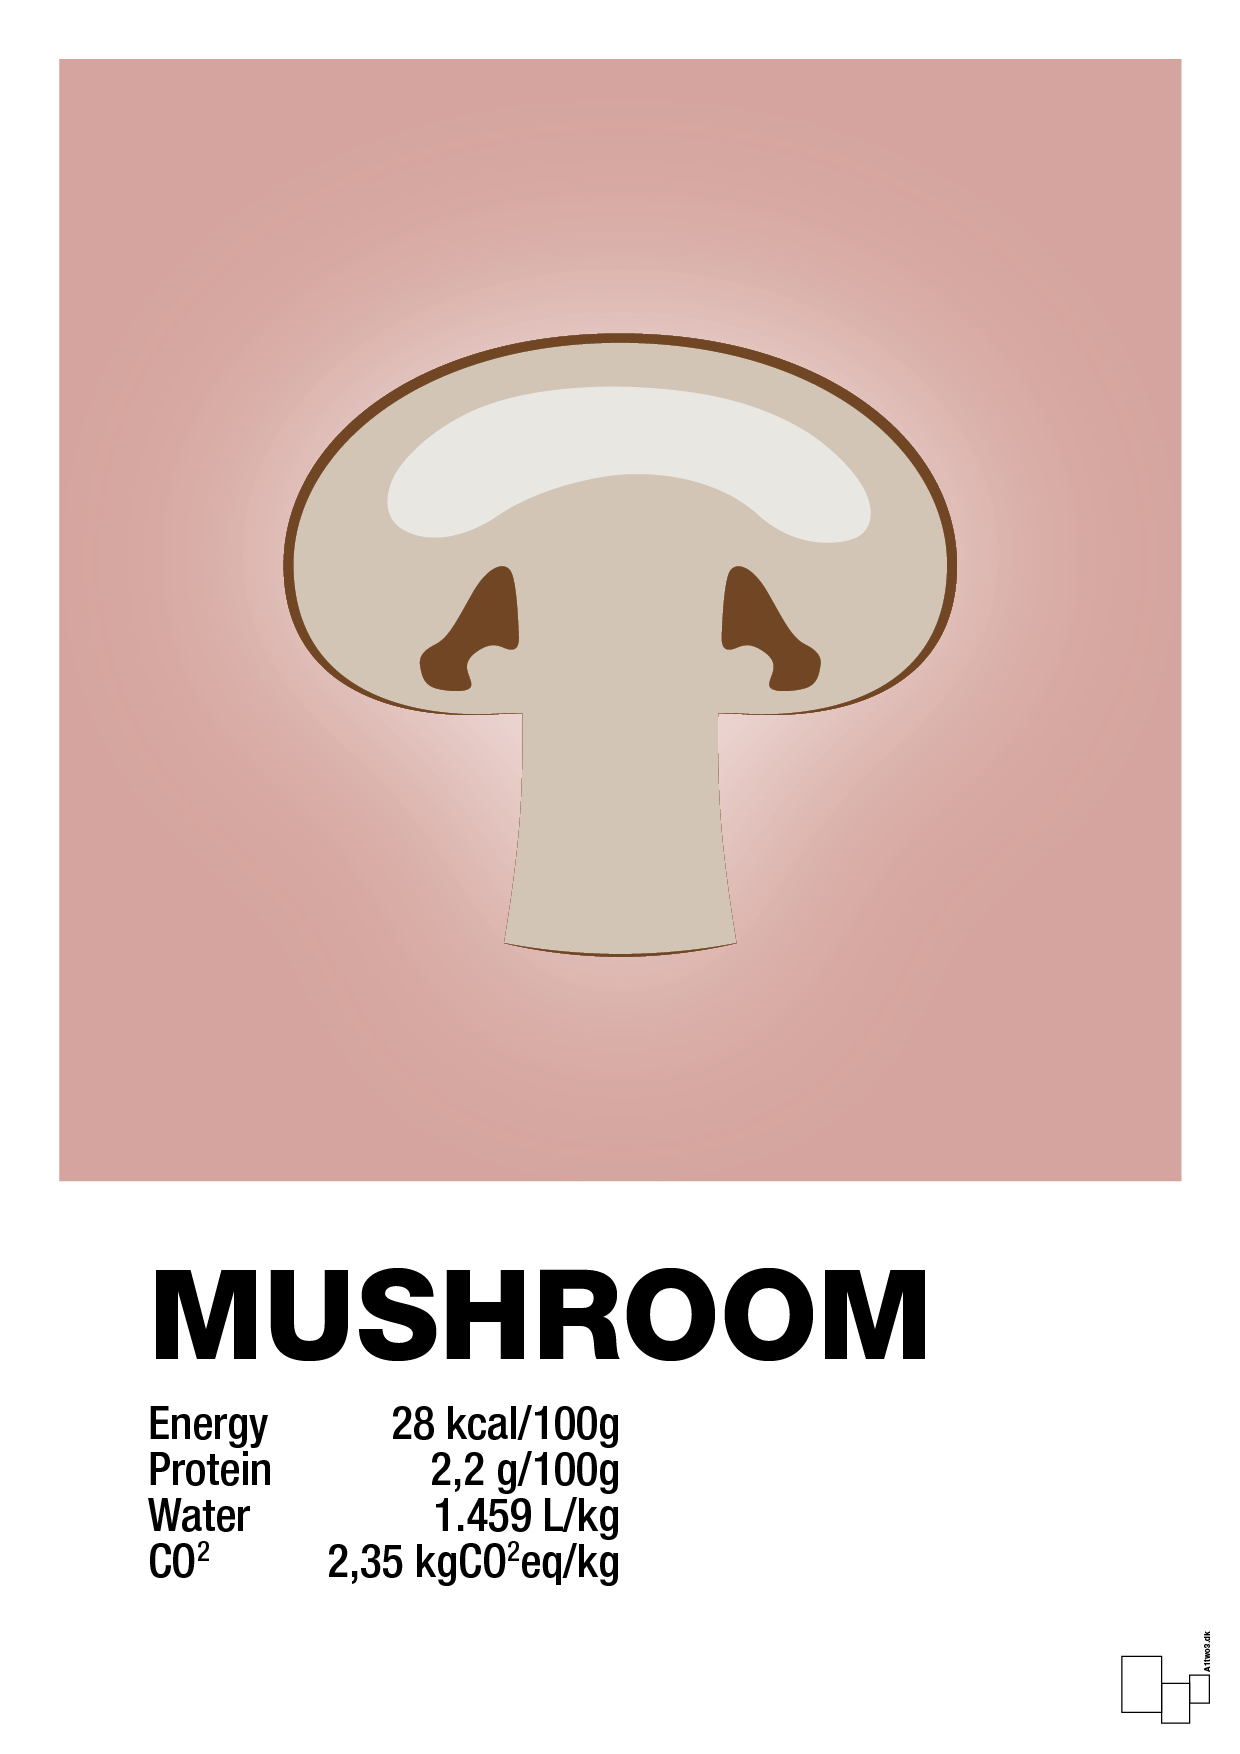 mushroom nutrition og miljø - Plakat med Mad & Drikke i Bubble Shell